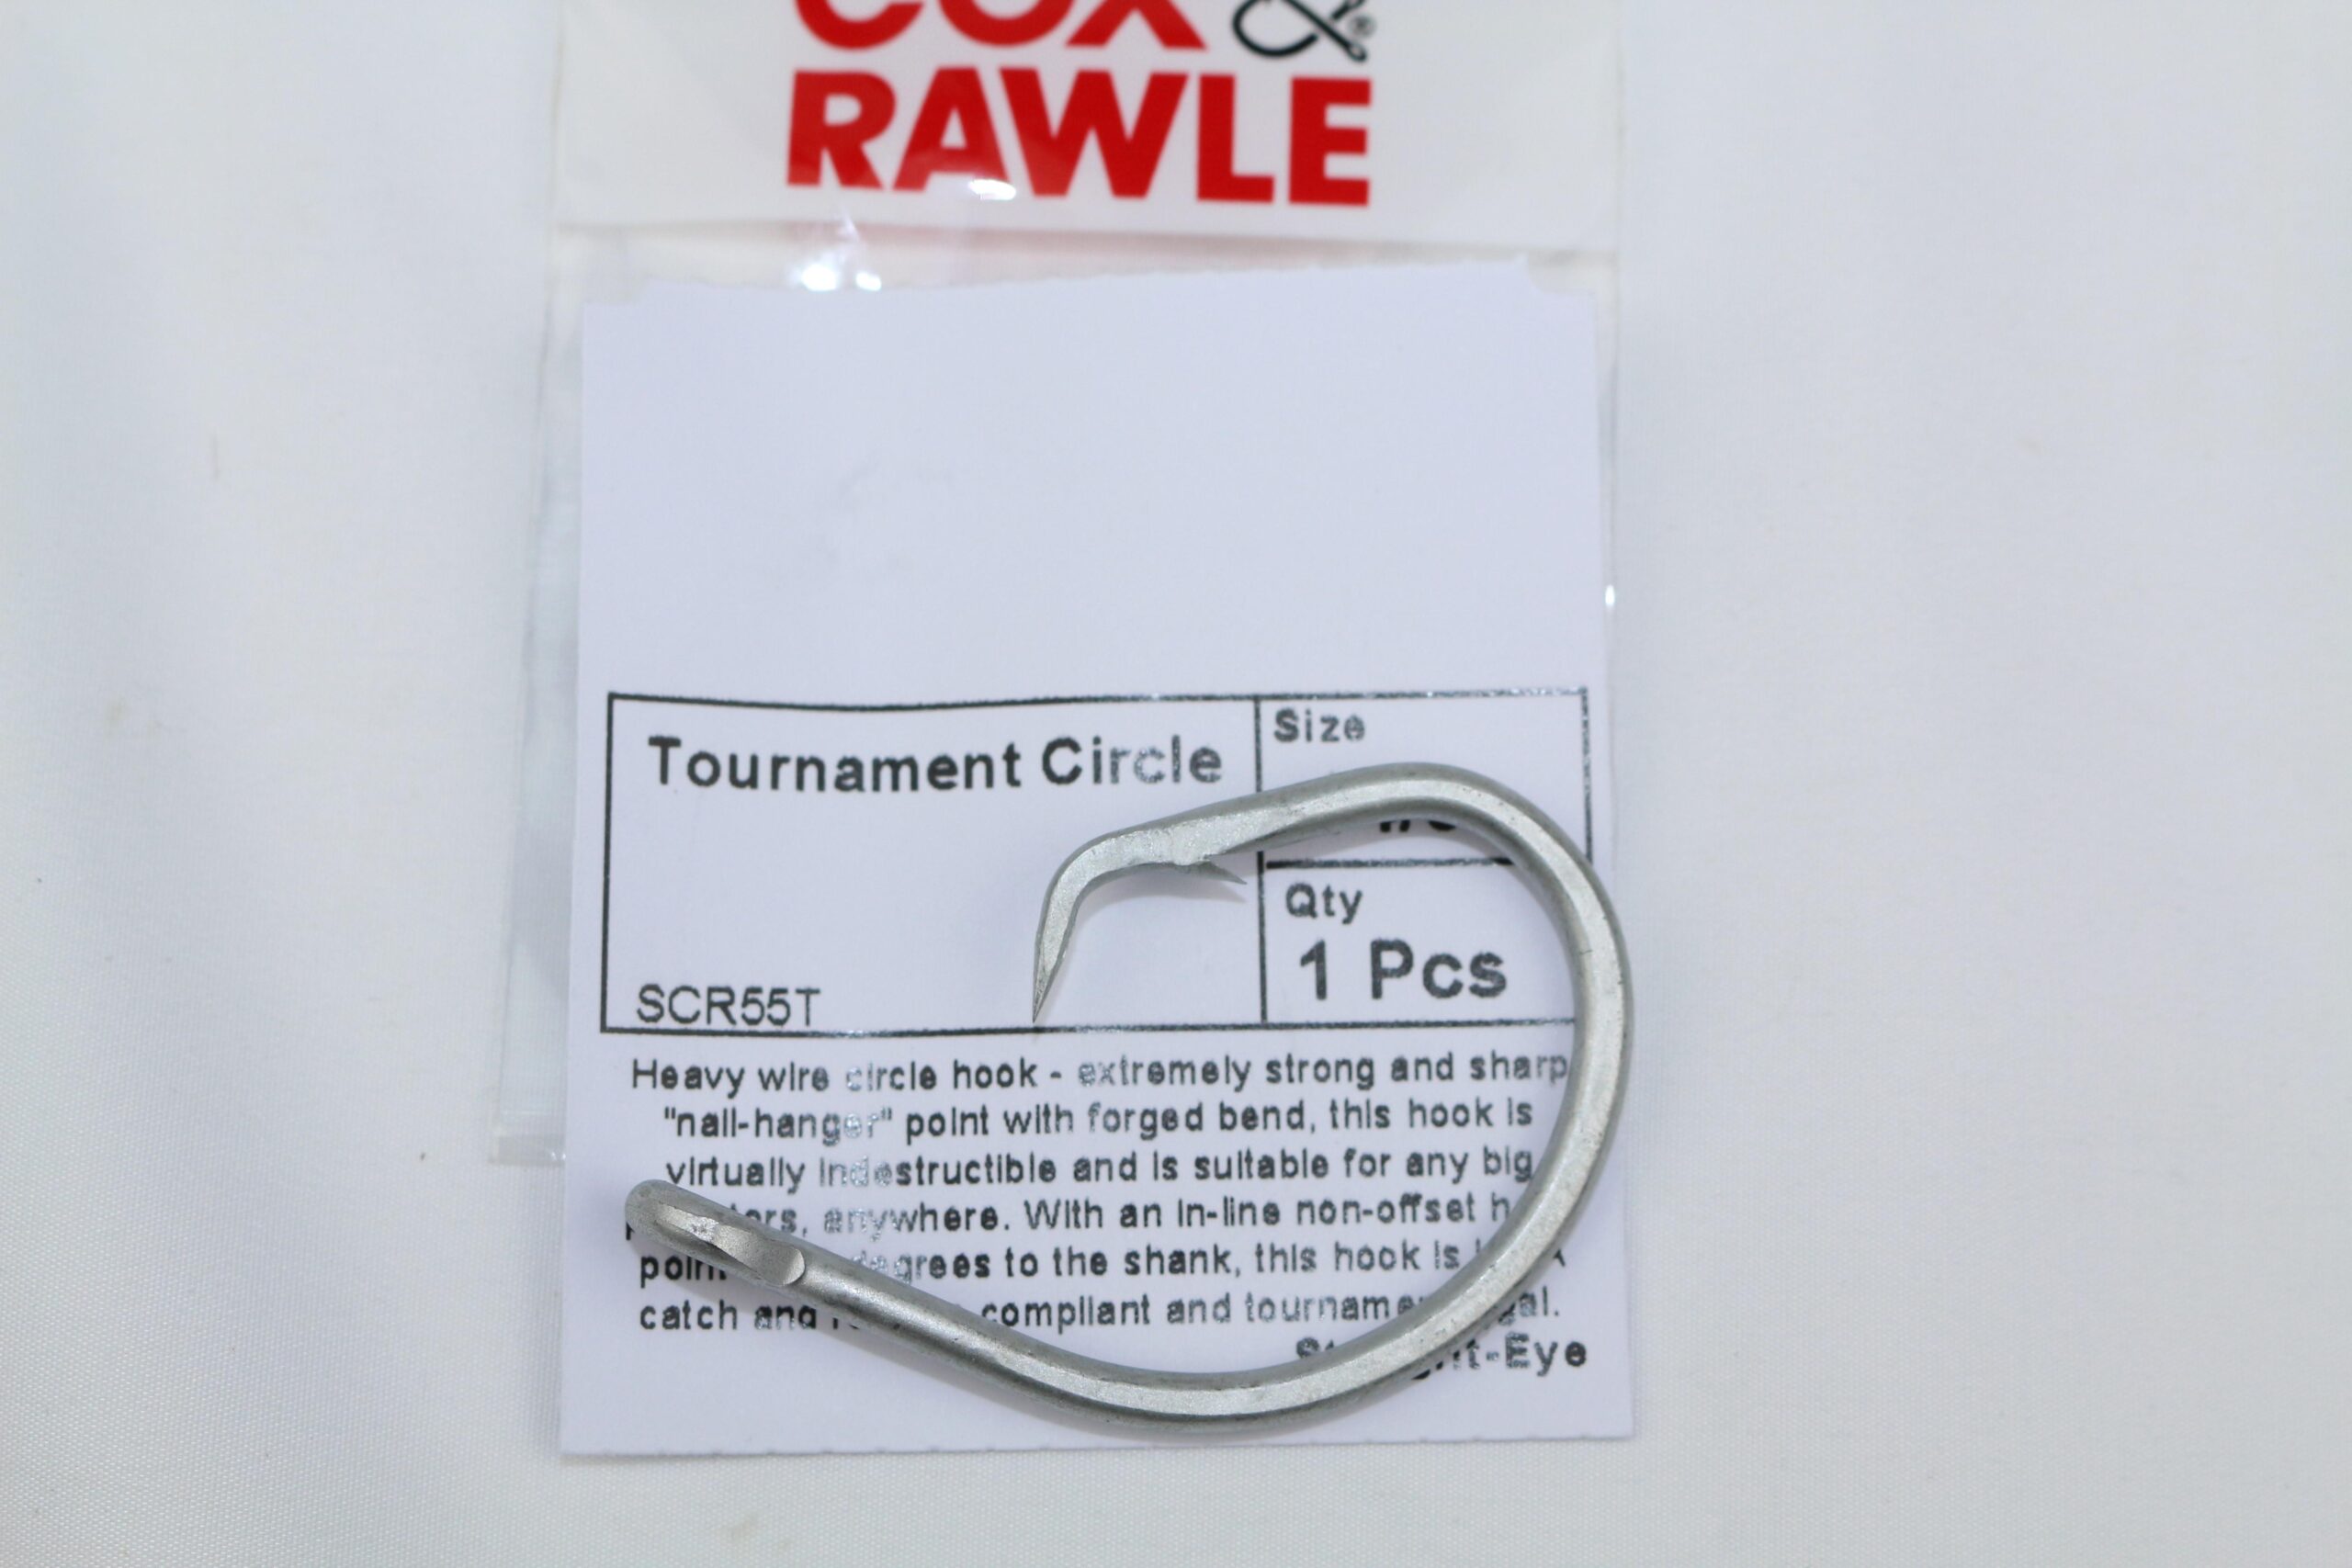 Cox & Rawle Tournament Circle Hook